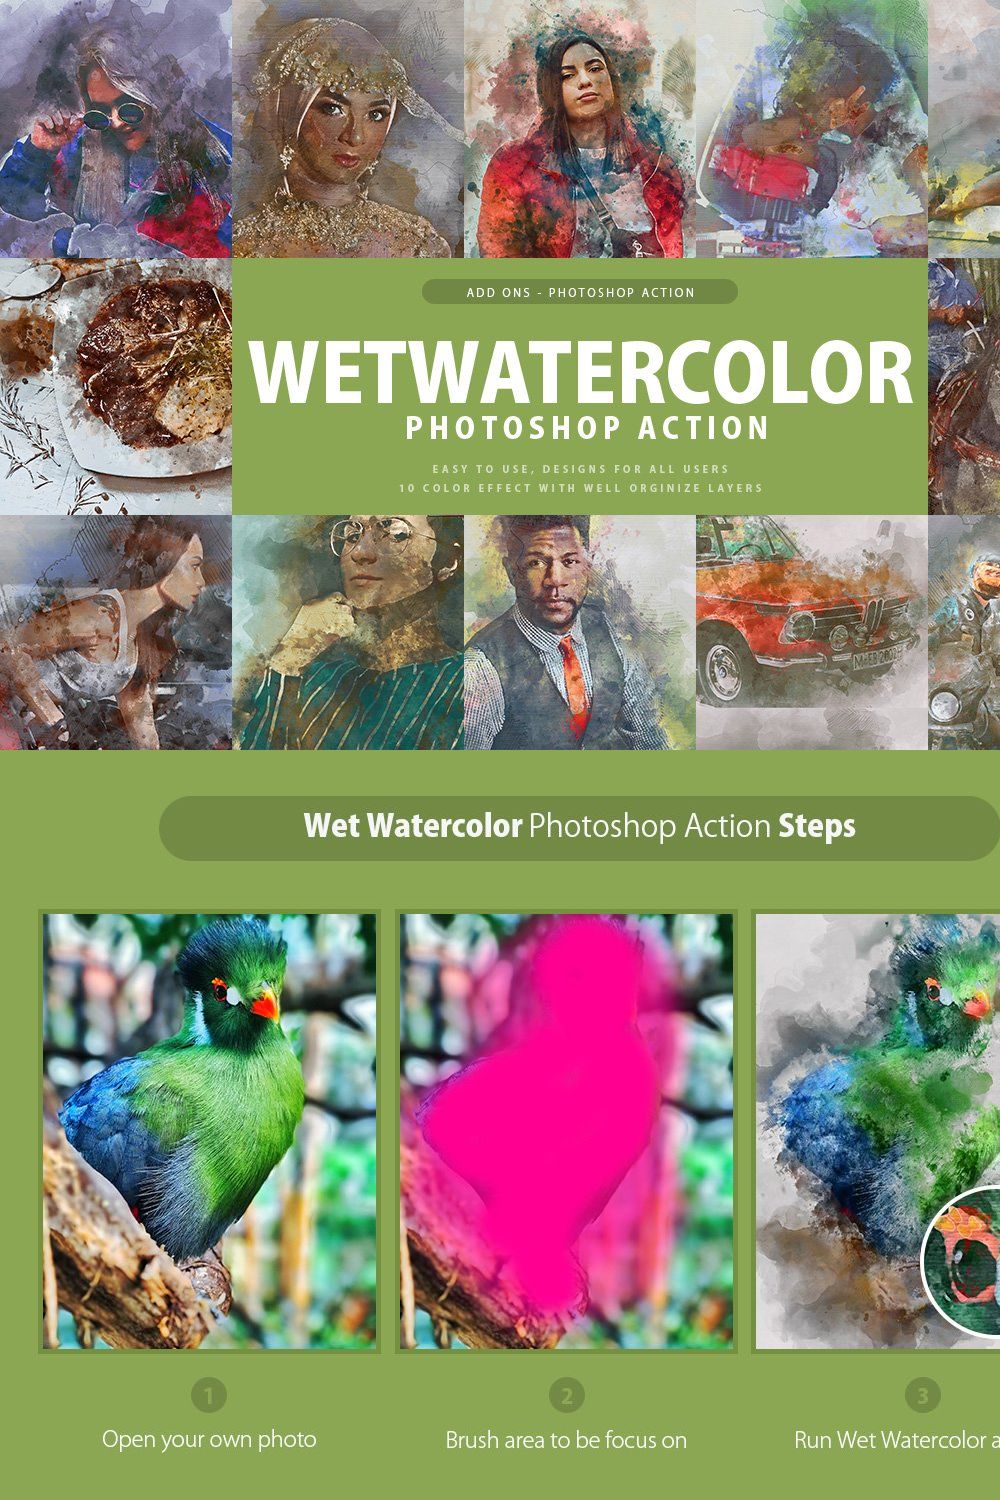 Wet Watercolor Photoshop Action pinterest preview image.